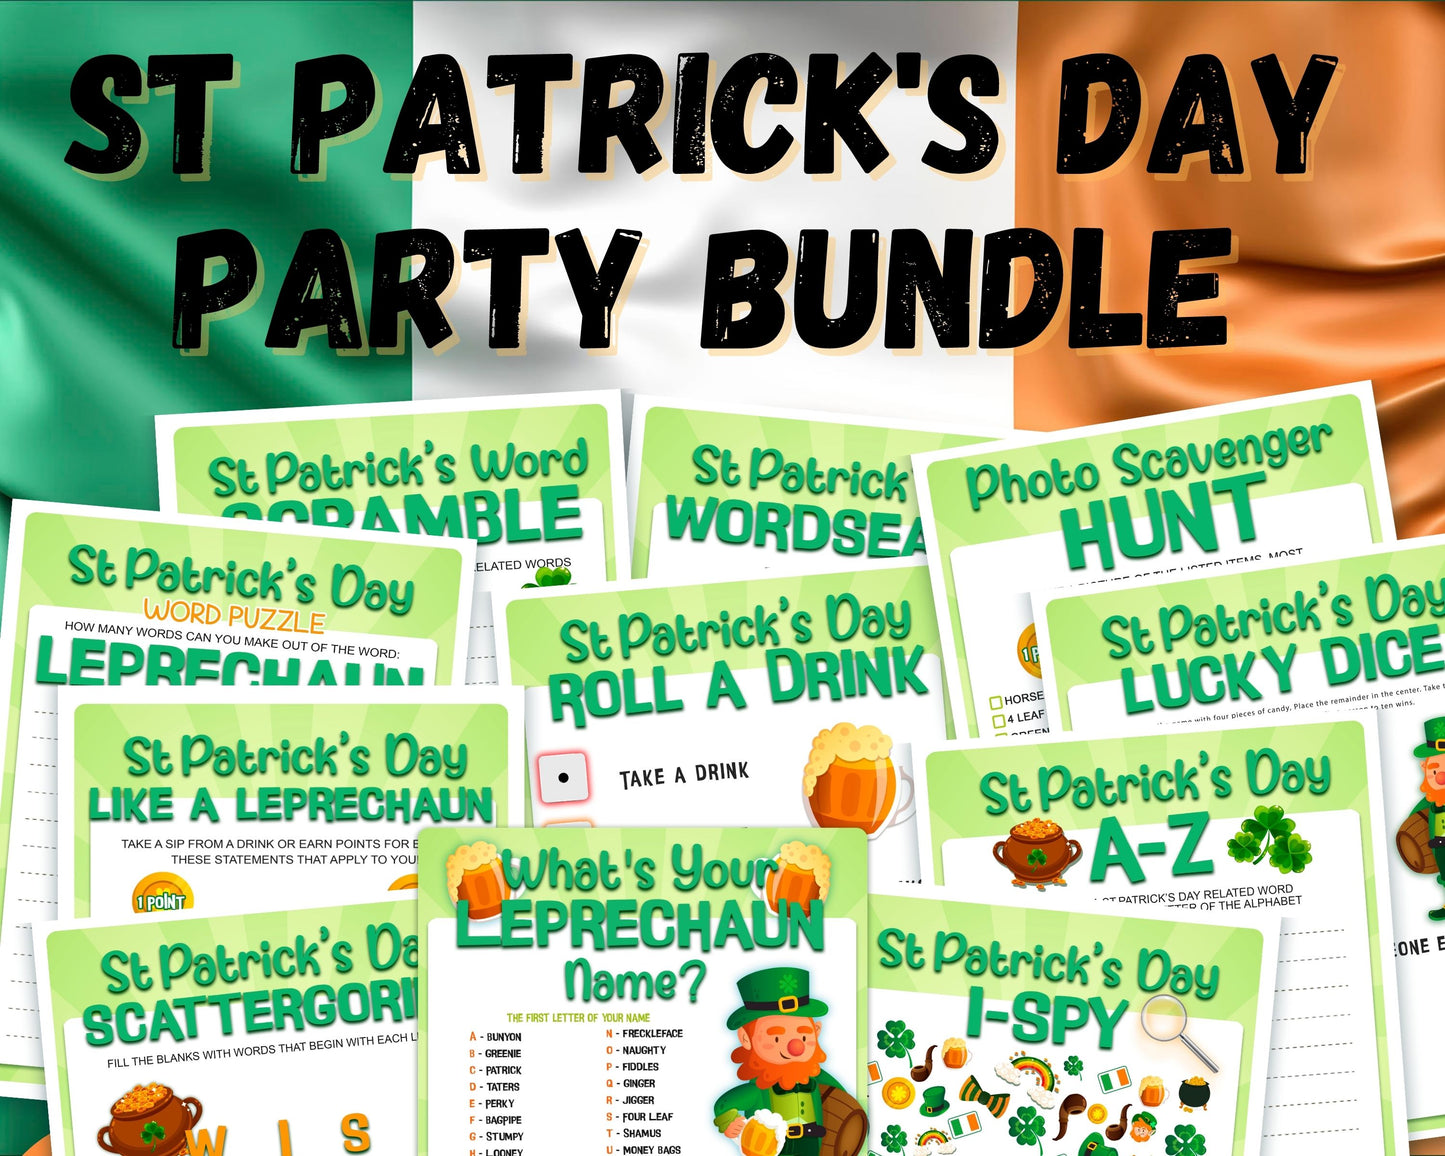 St Patrick's Day Party Bundle